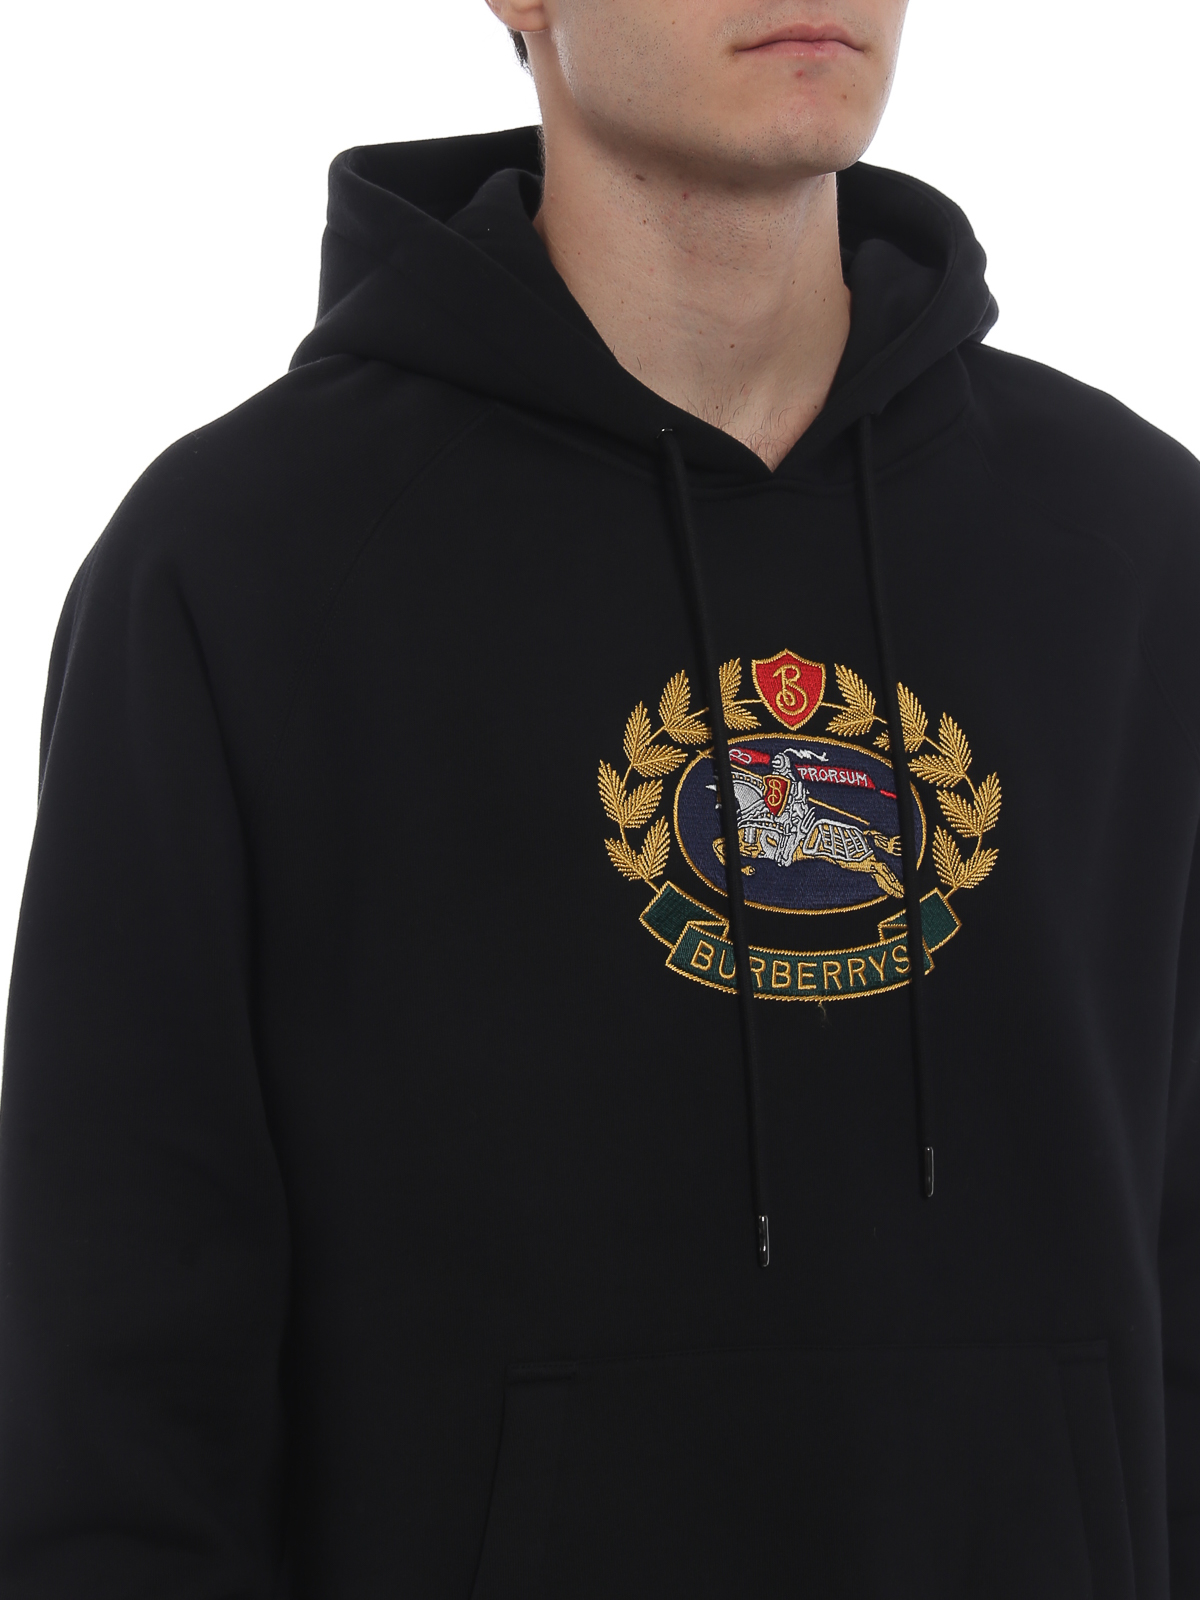 burberry hoodie logo